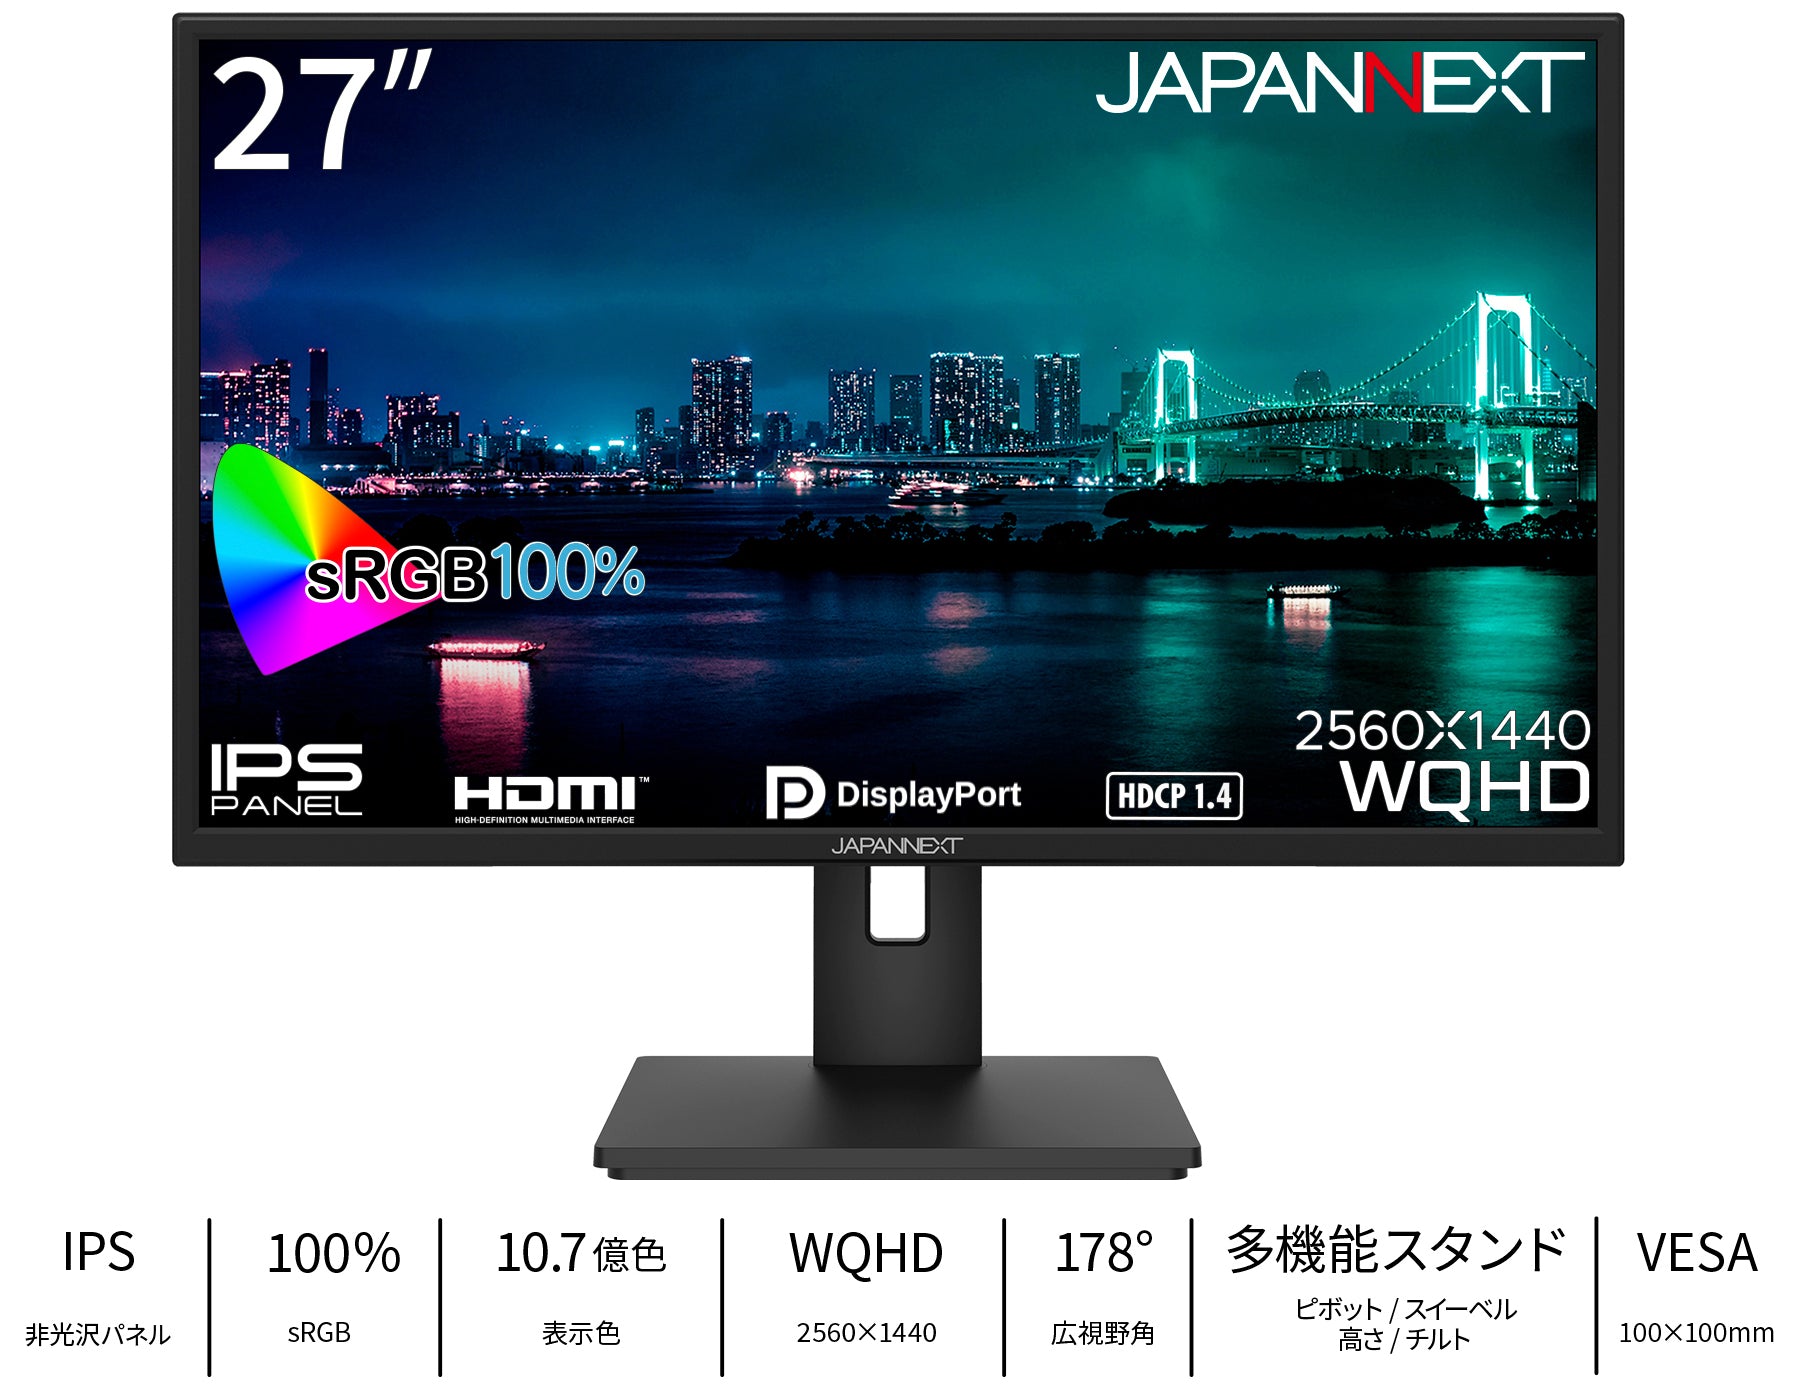 JAPANNEXT IPSパネル搭載27インチ WQHD解像度液晶モニター HDMI DP